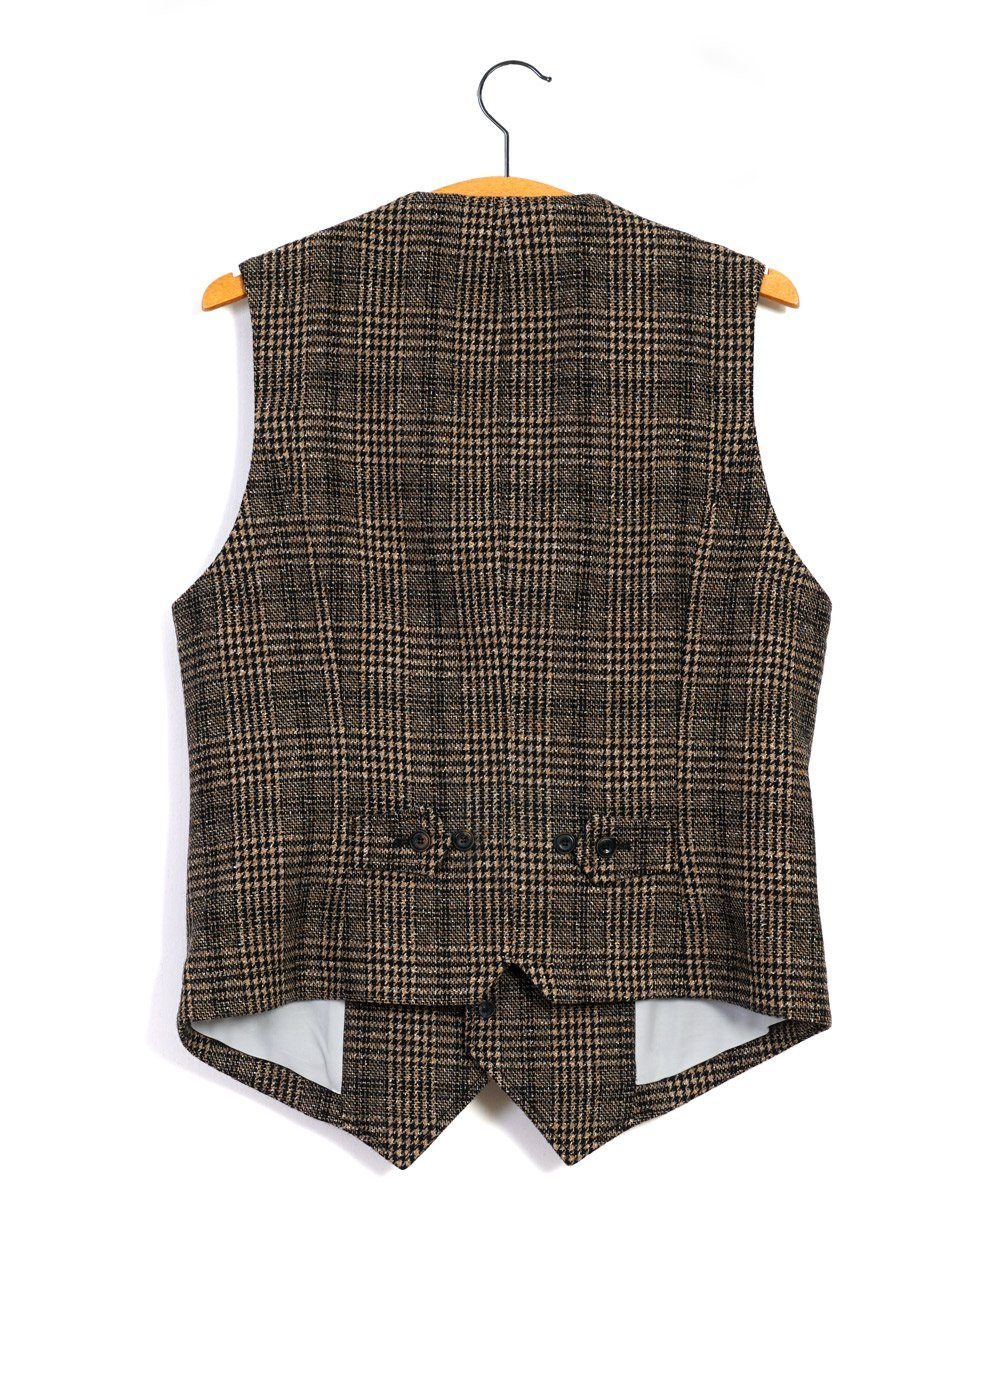 HANSEN Garments - William | Lapel Waistcoat | Checkered - HANSEN Garments